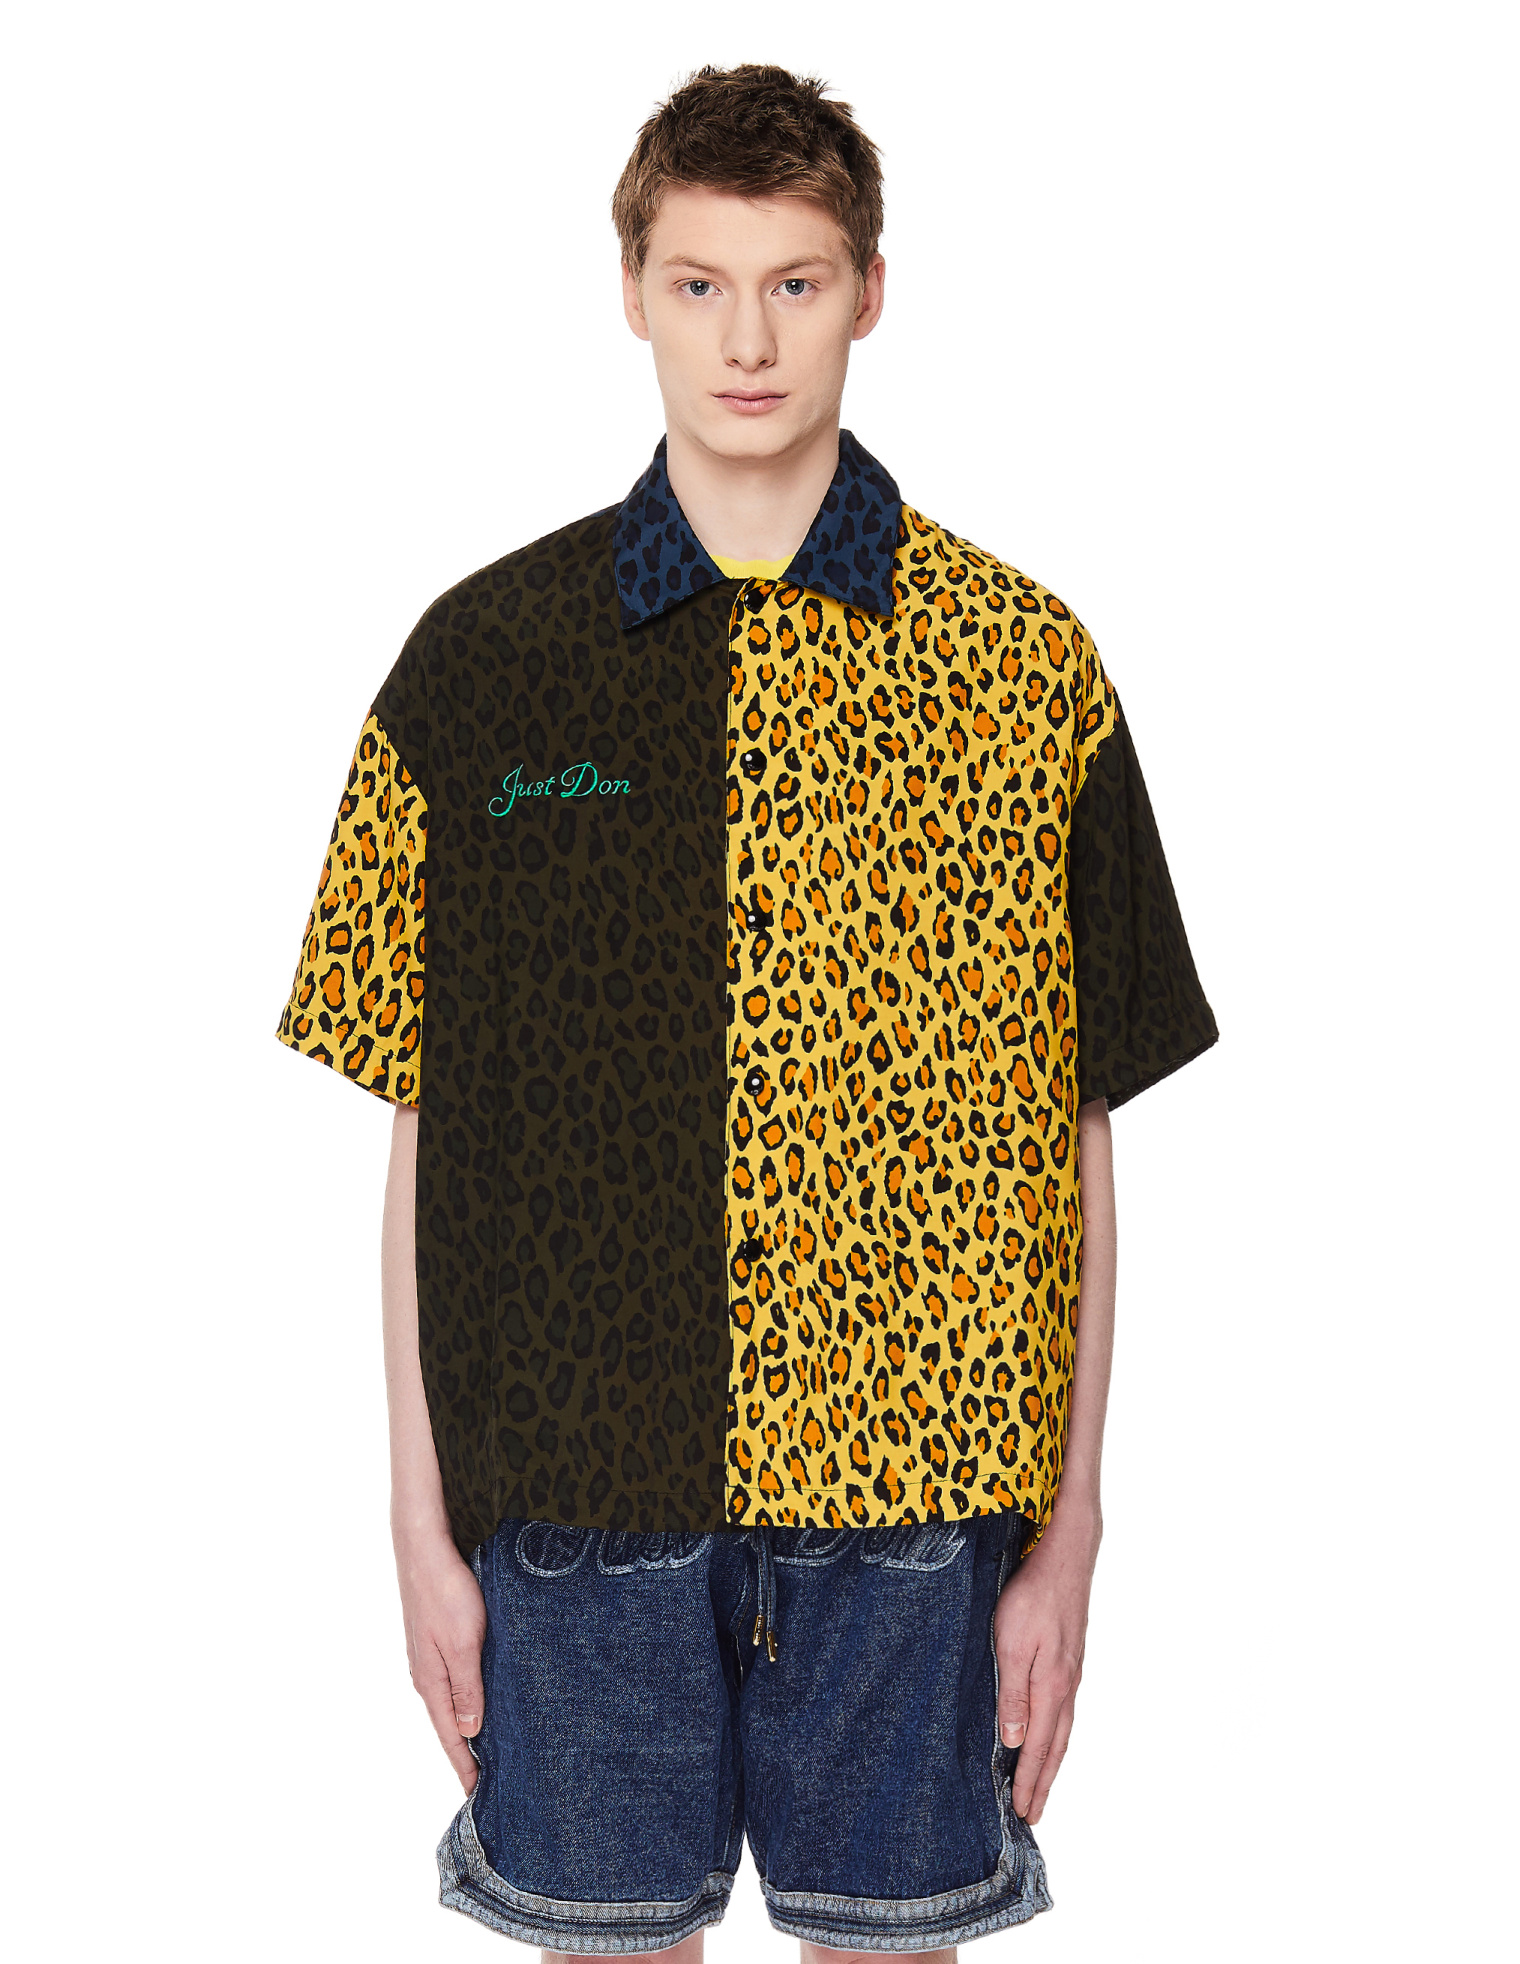 JUST DON Leopard Warmup Shirt